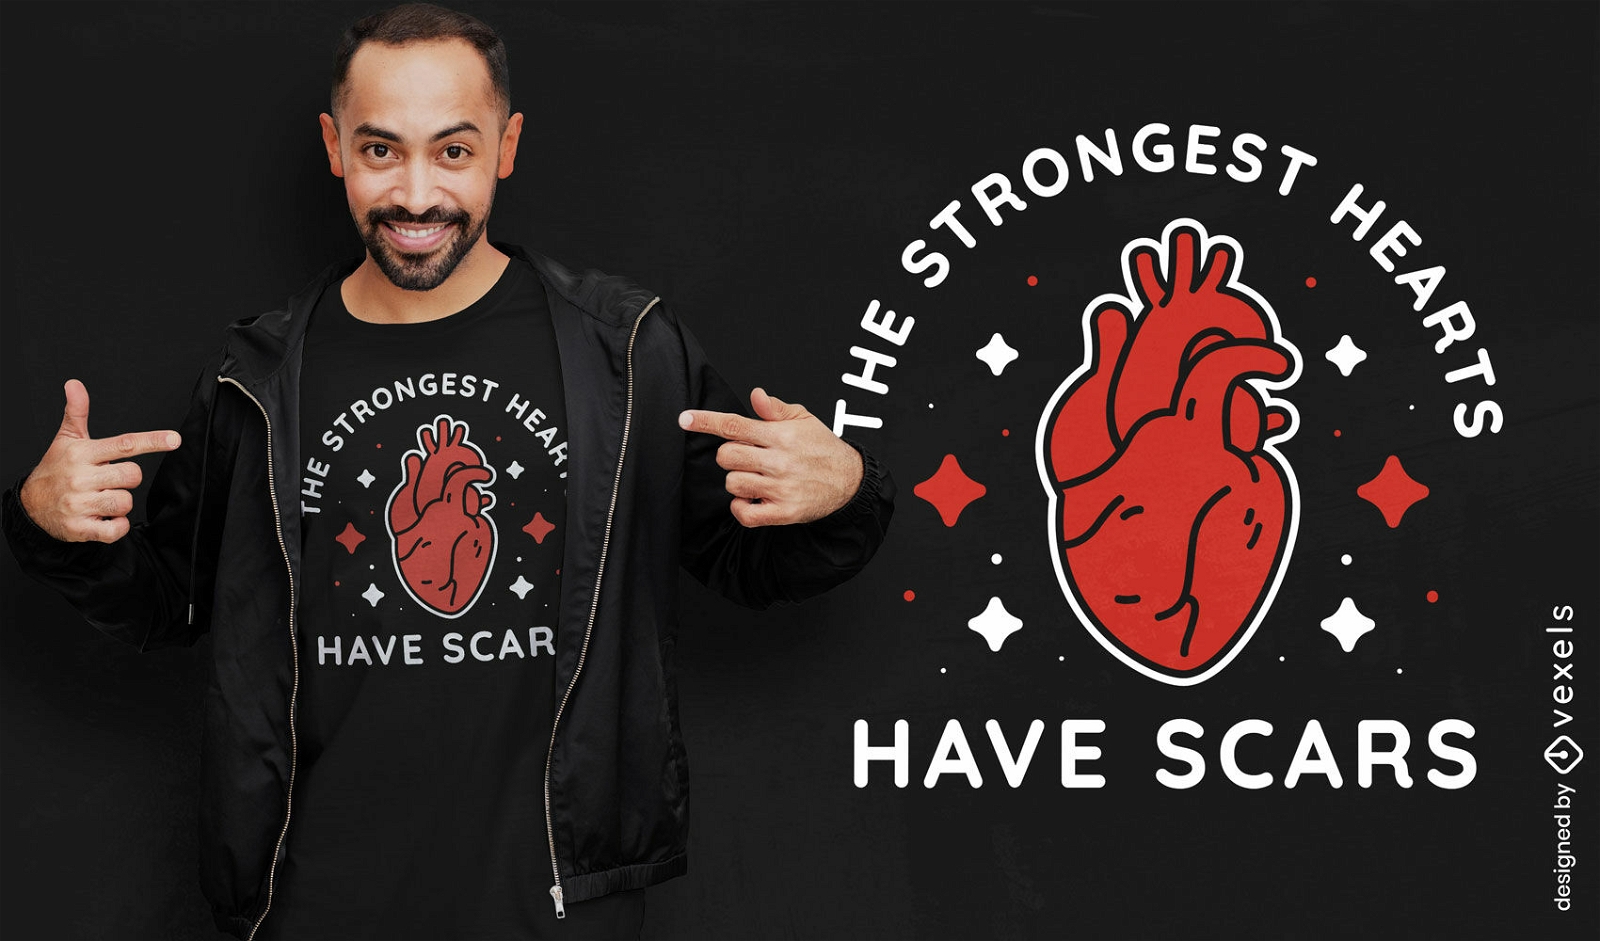 Heart attack survivor quote t-shirt design